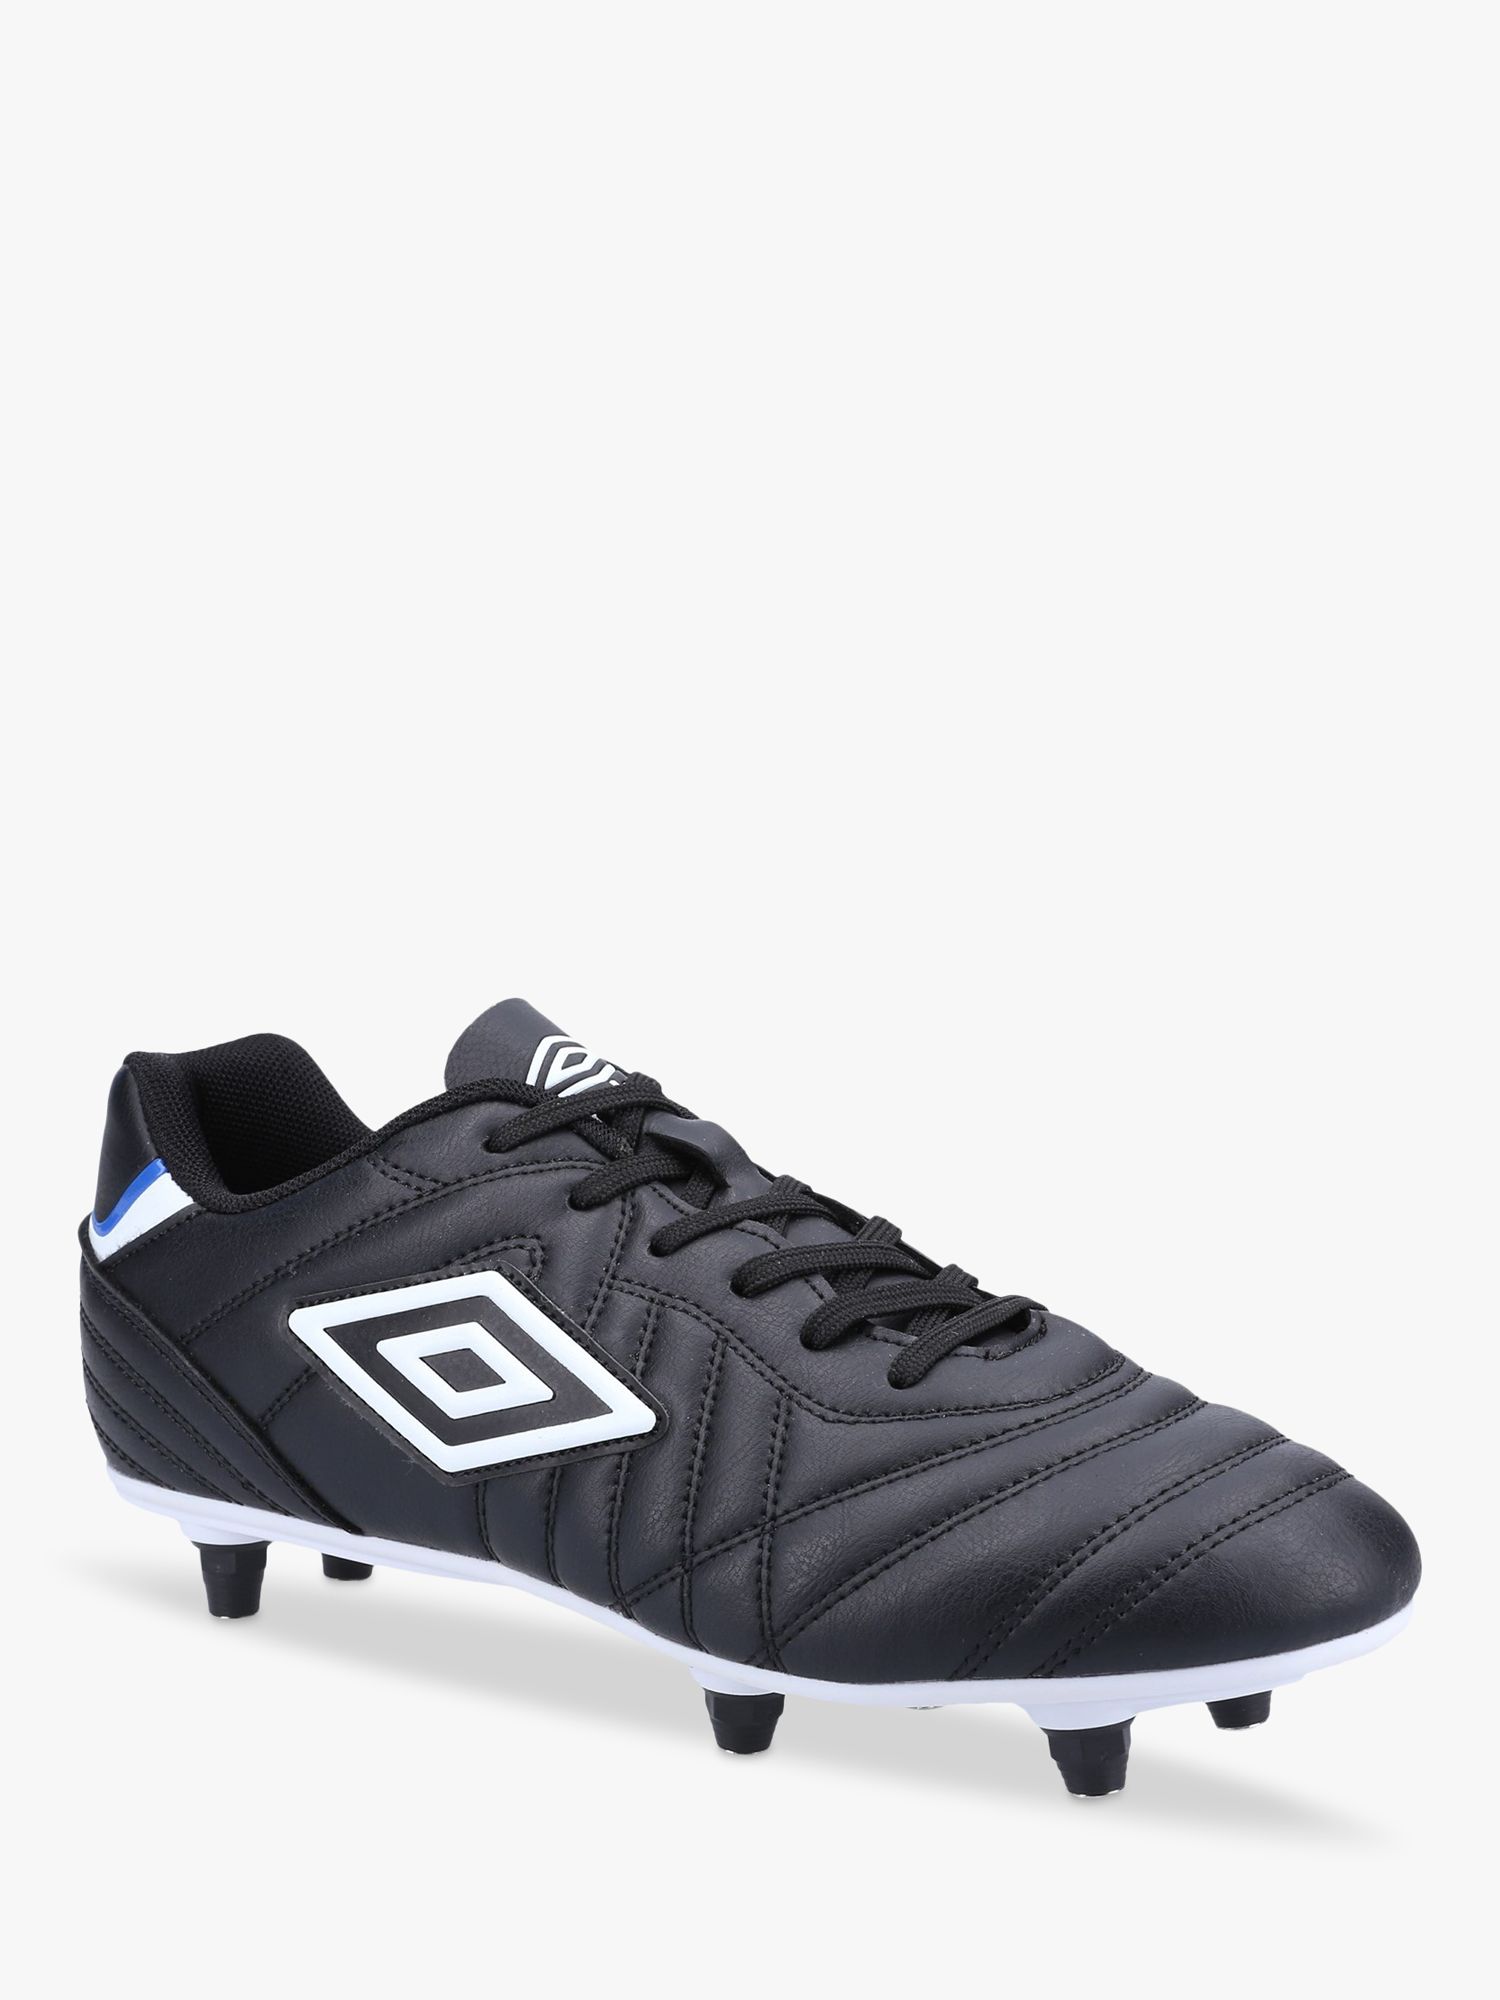 Umbro Speciali Liga Soft Ground Football Boots, Black, 11